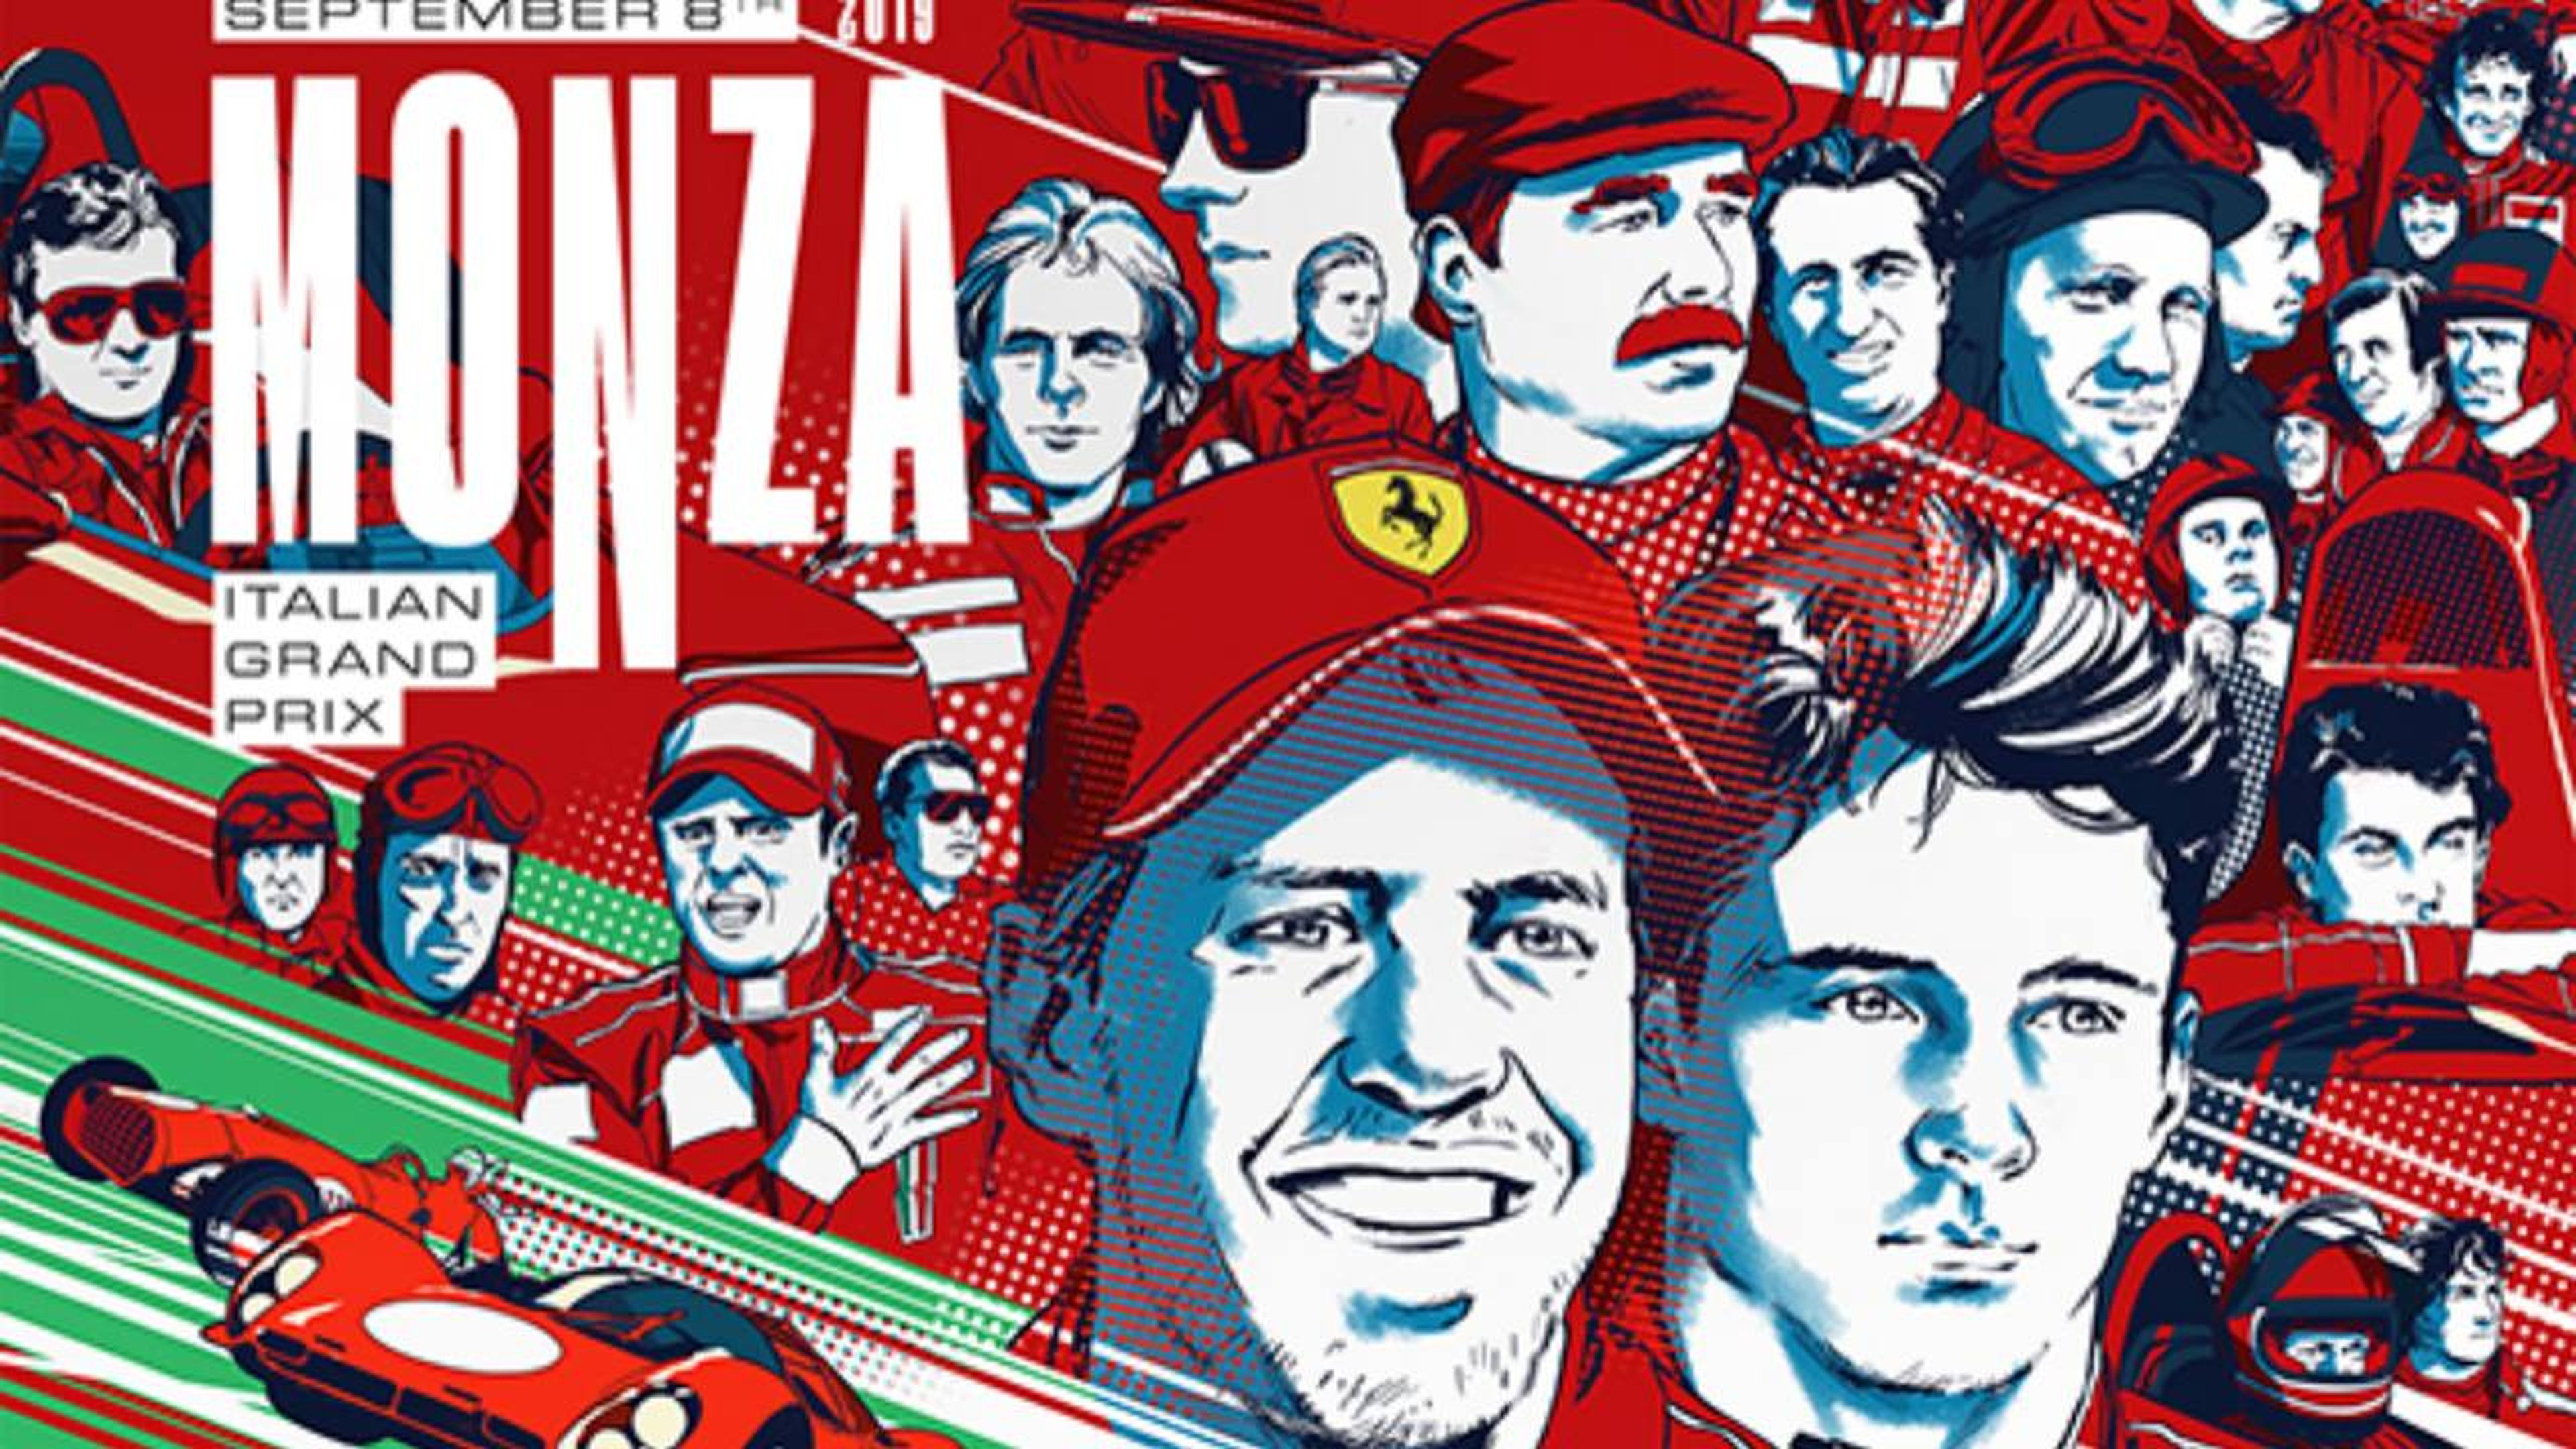 Poster de Ferrari para Monza